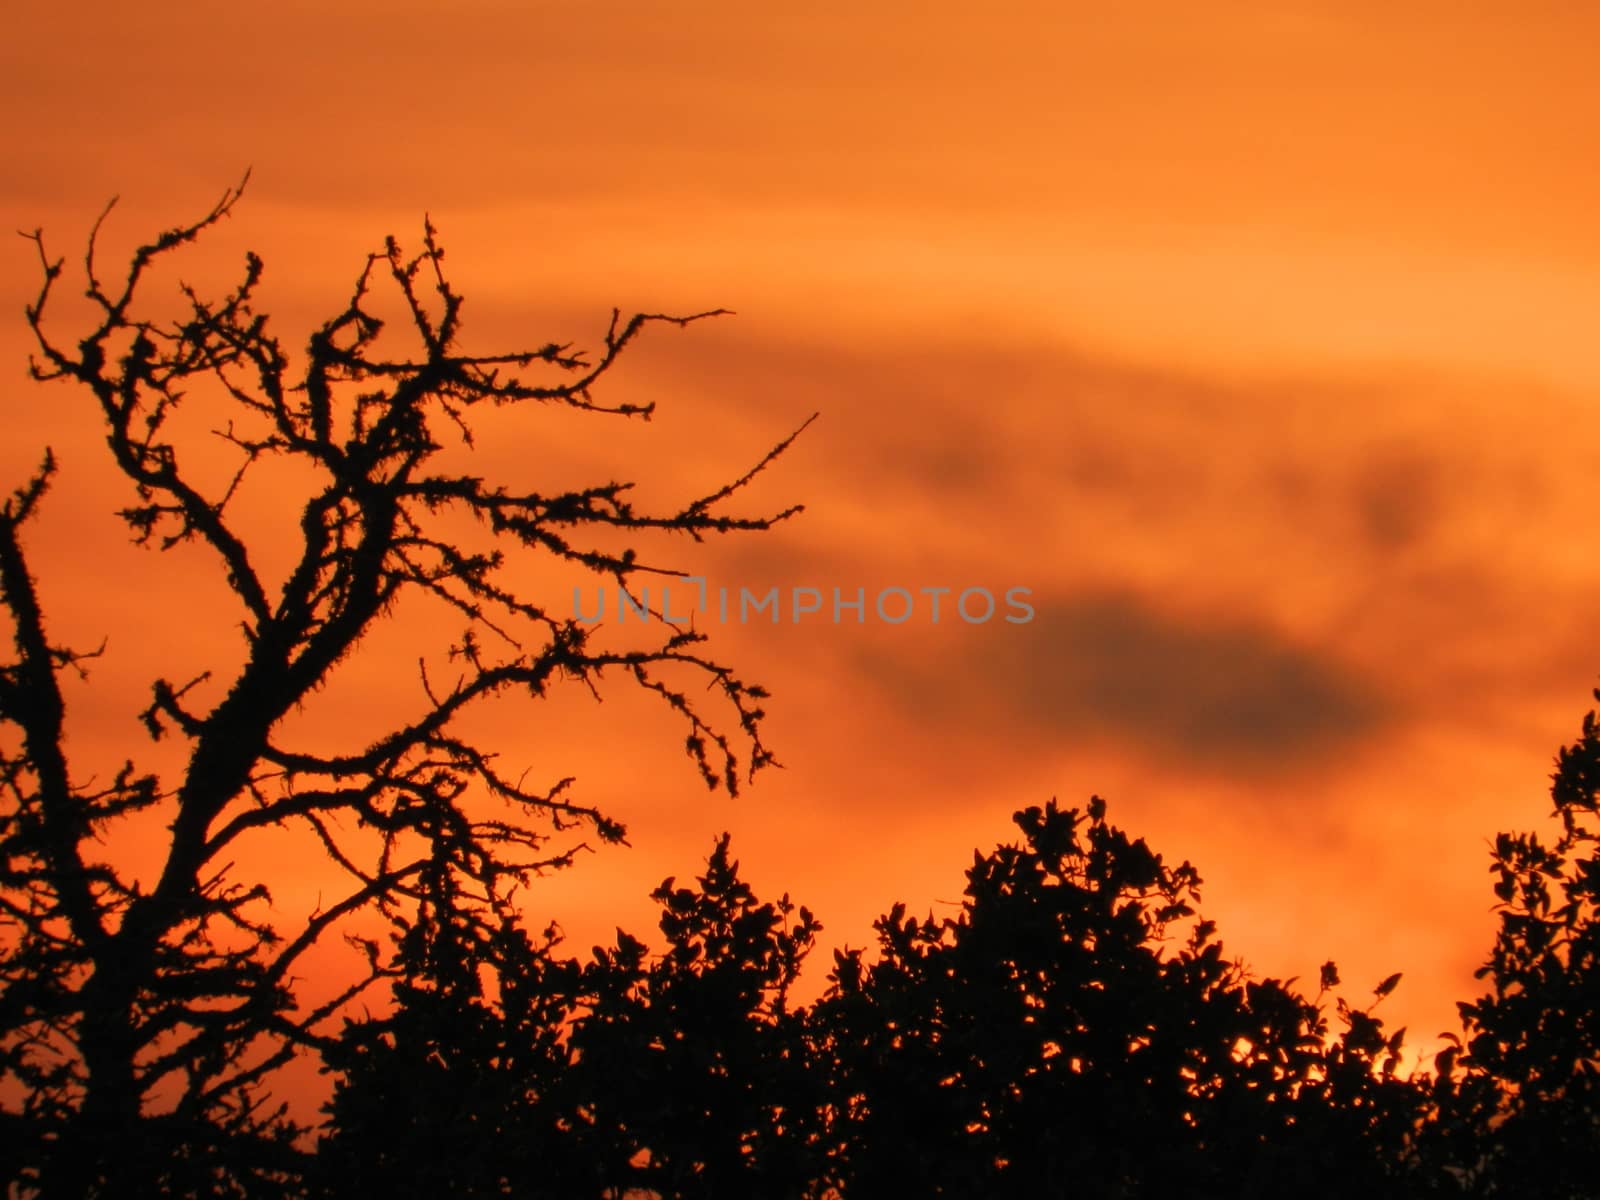 Dead tree limbs reach into an orange October sky